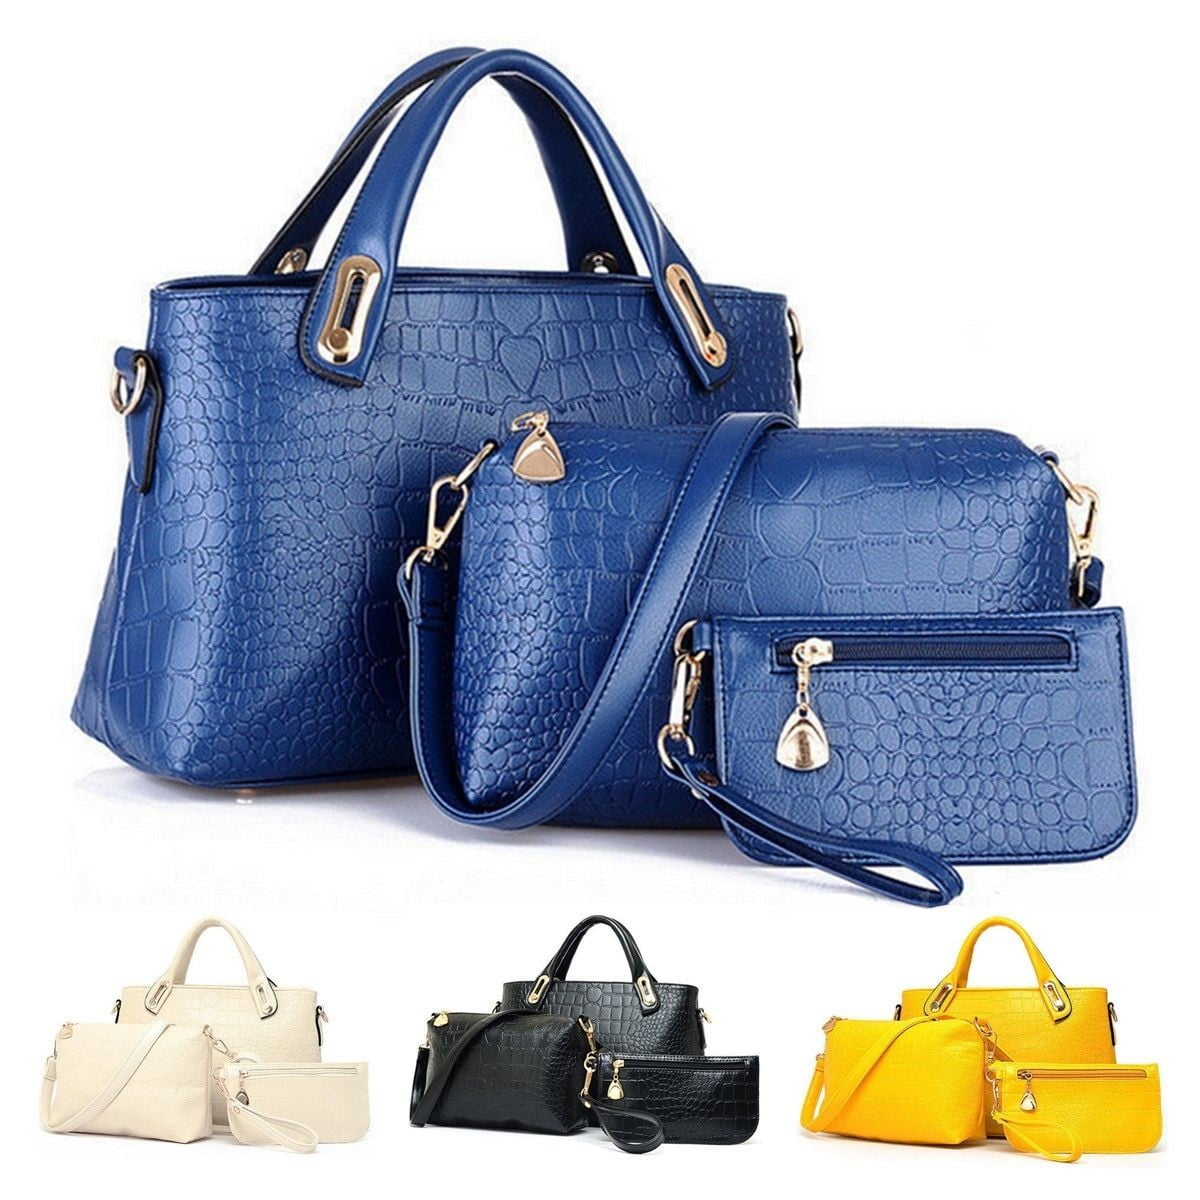 Women Bag Clearance, Ladies Tote Purse Leather Zipper Messenger Hobo Bag, 3Pcs Sets Handbag ...